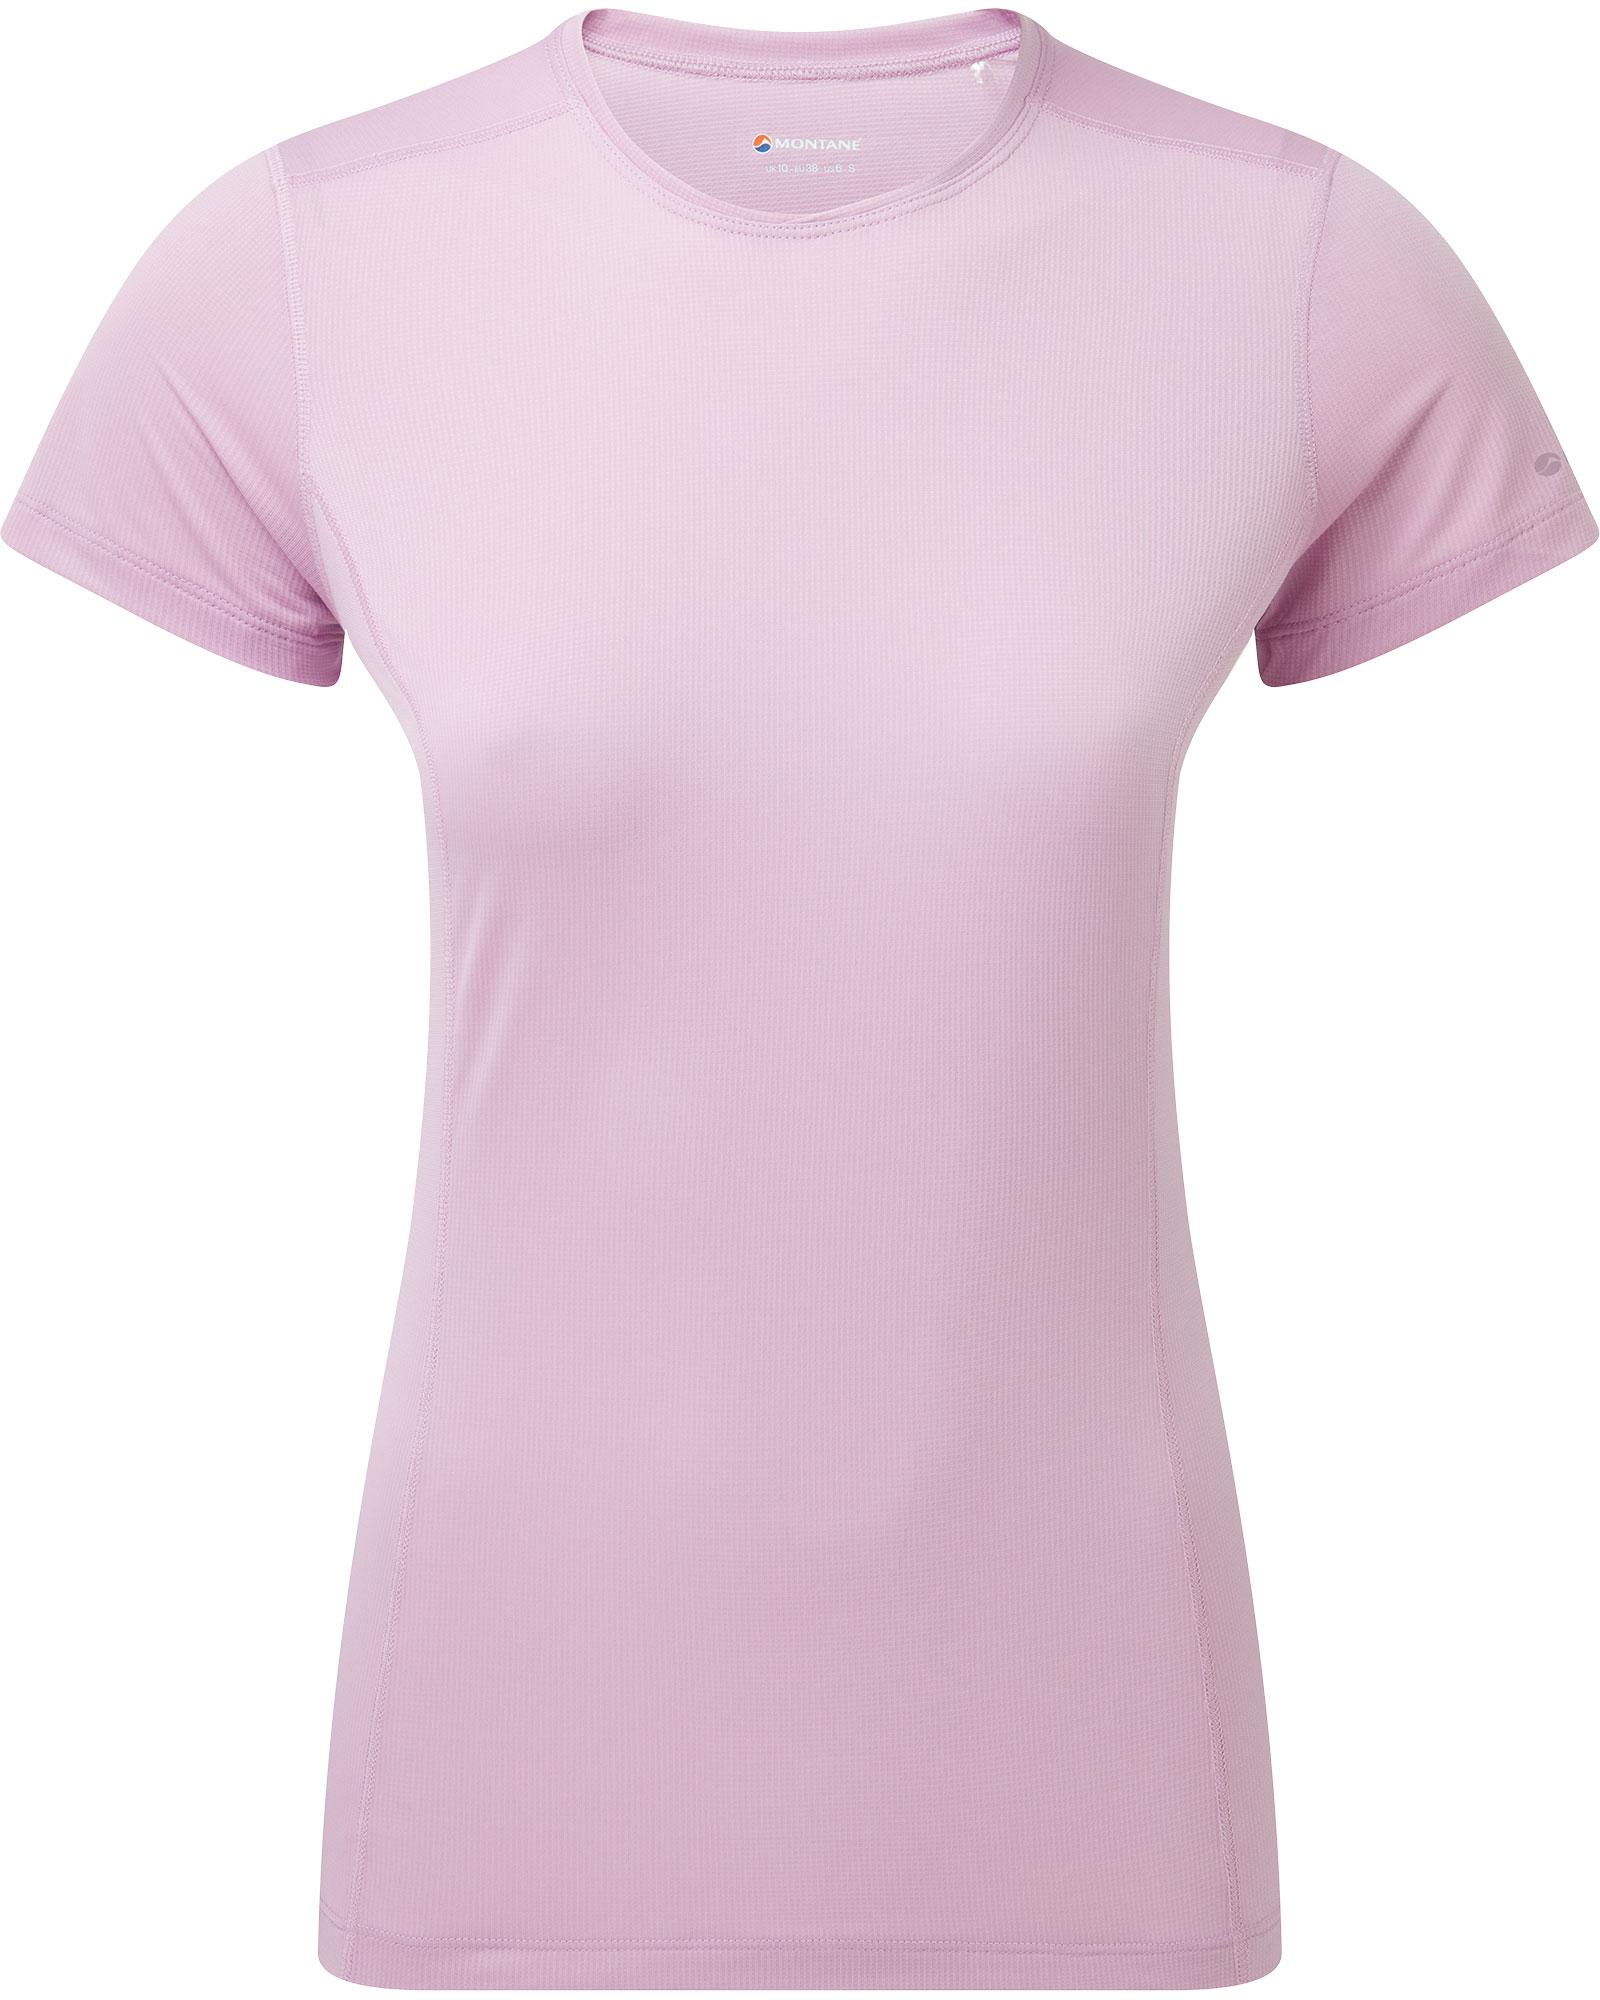 Montane Dart Lite Women’s T Shirt - Allium 16